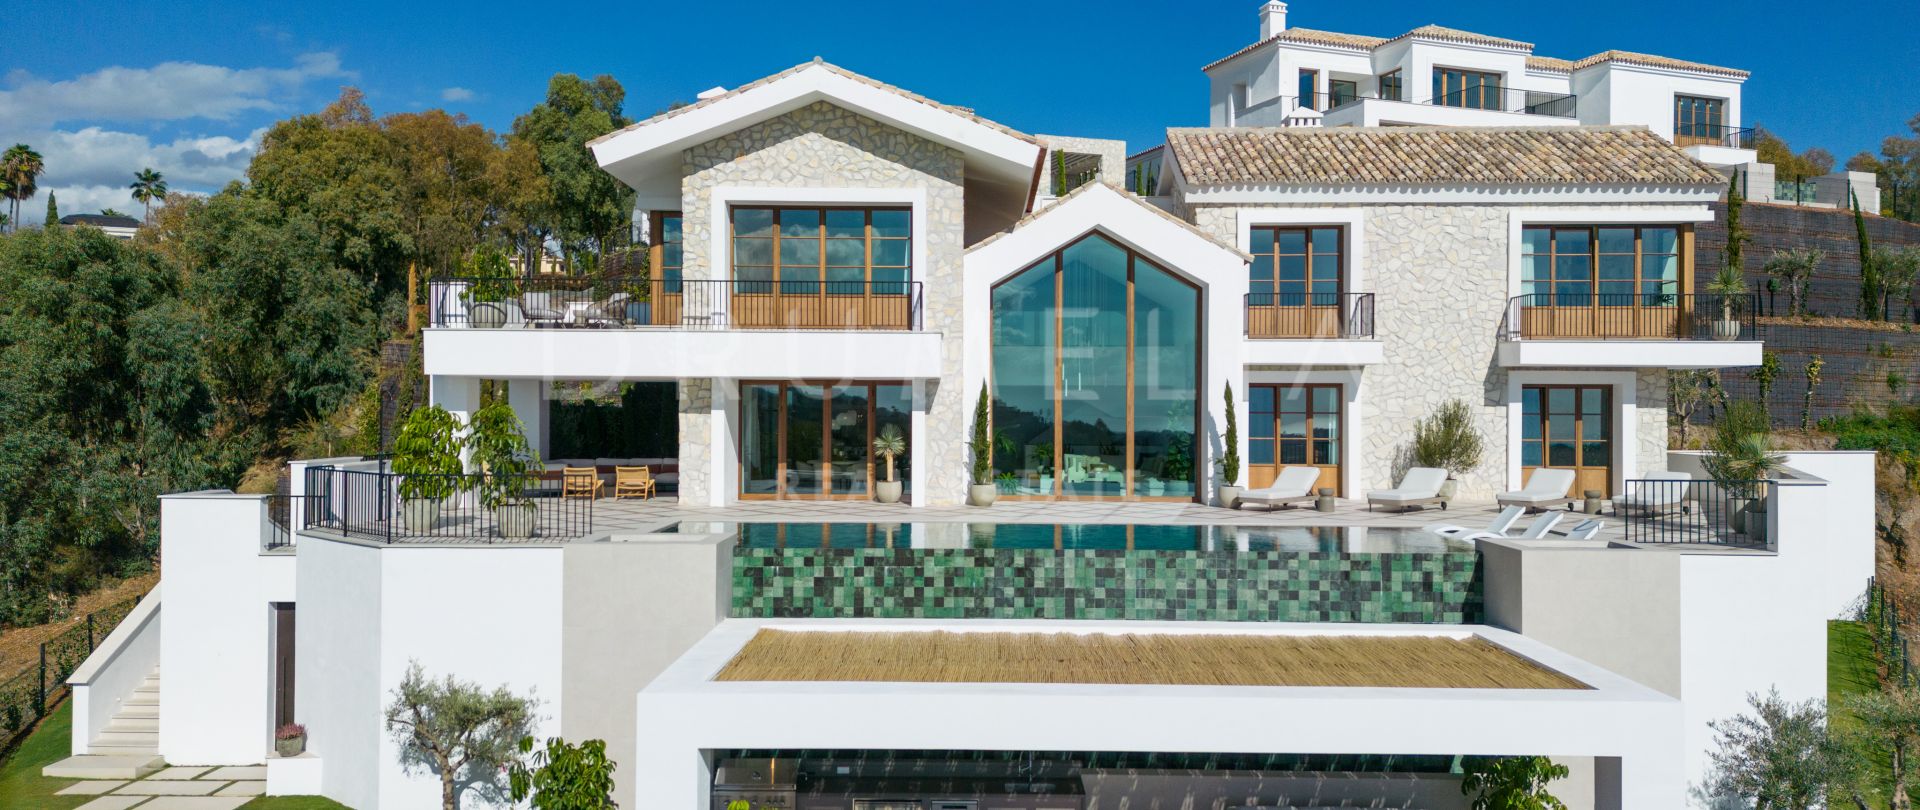 Extraordinaire villa moderne neuve de style hacienda avec vue sur la mer à El Herrojo Benahavís